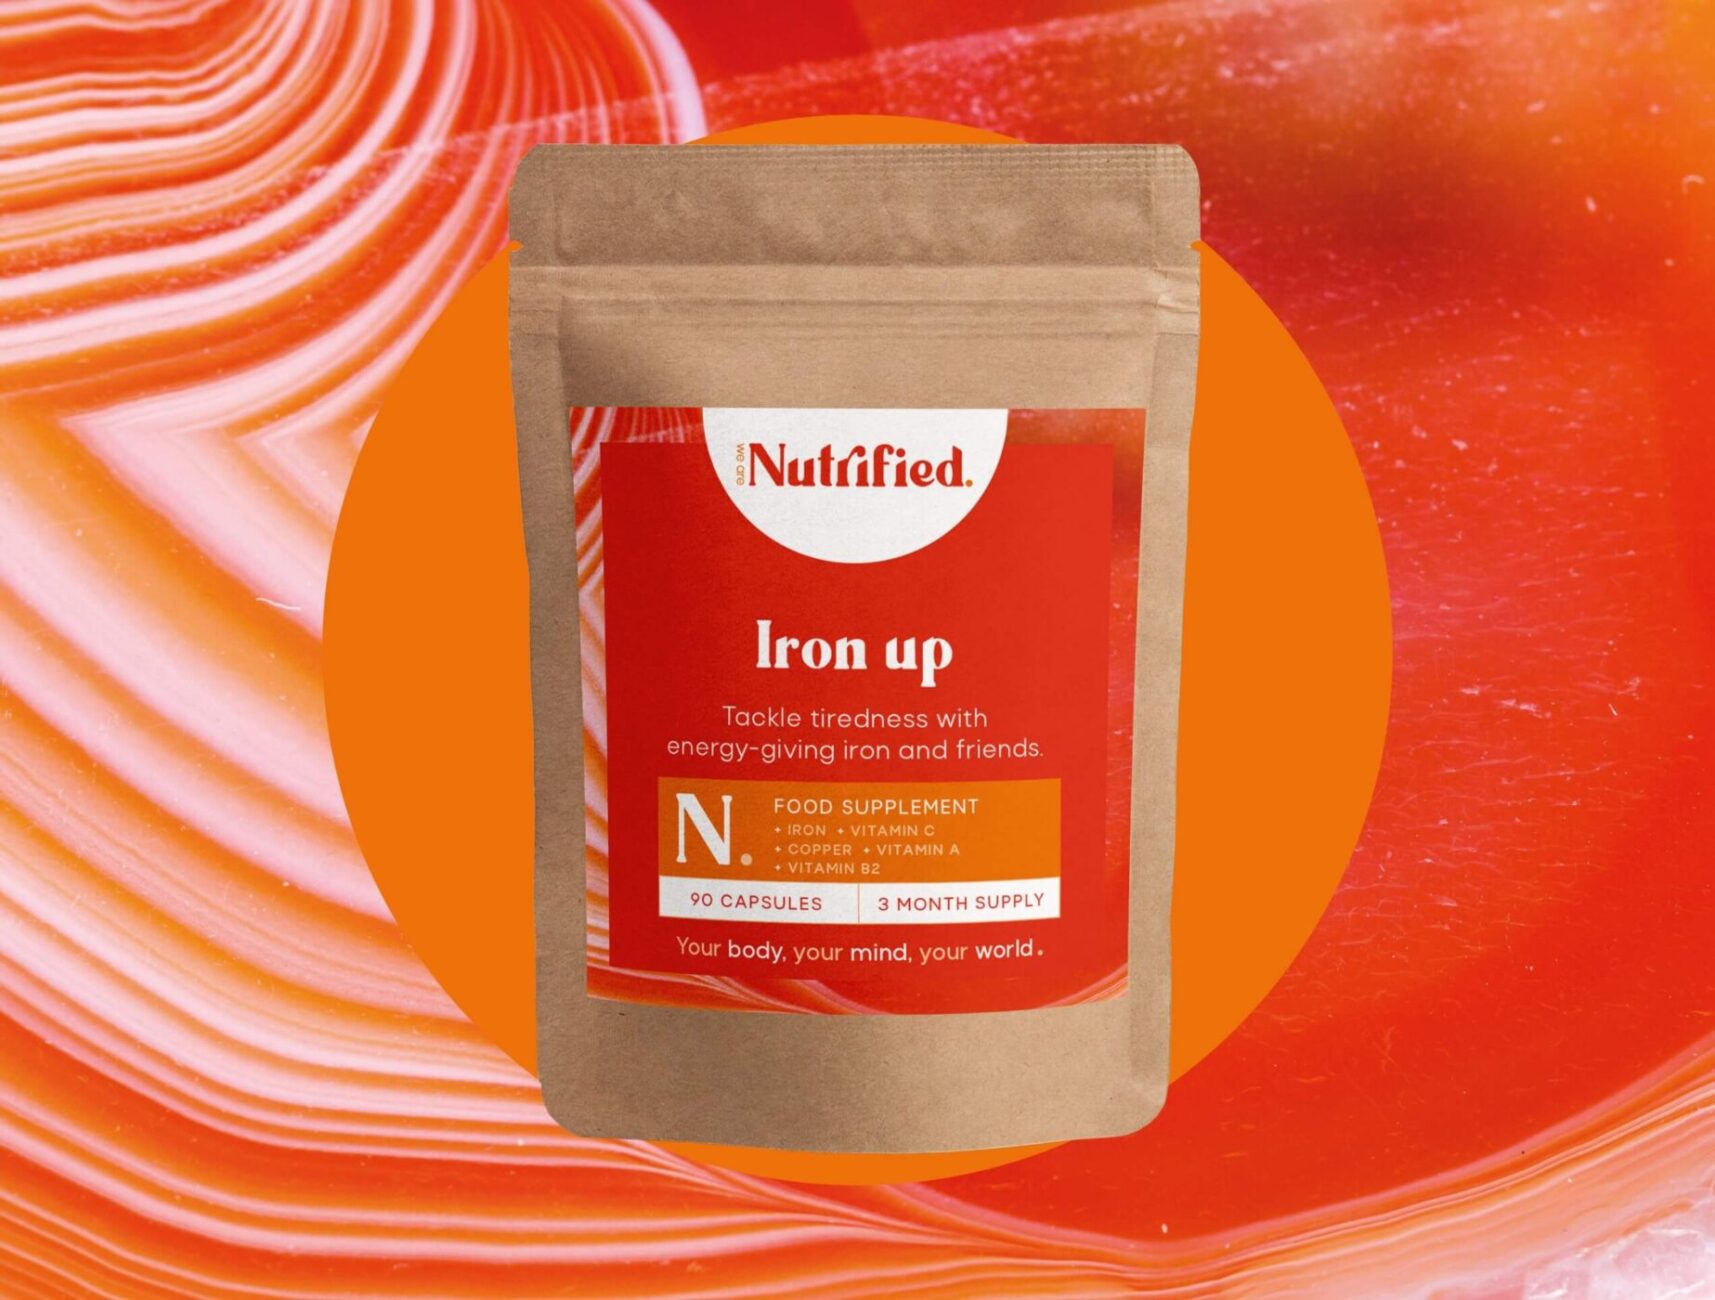 Iron up vegan iron supplement pouch front on orange background